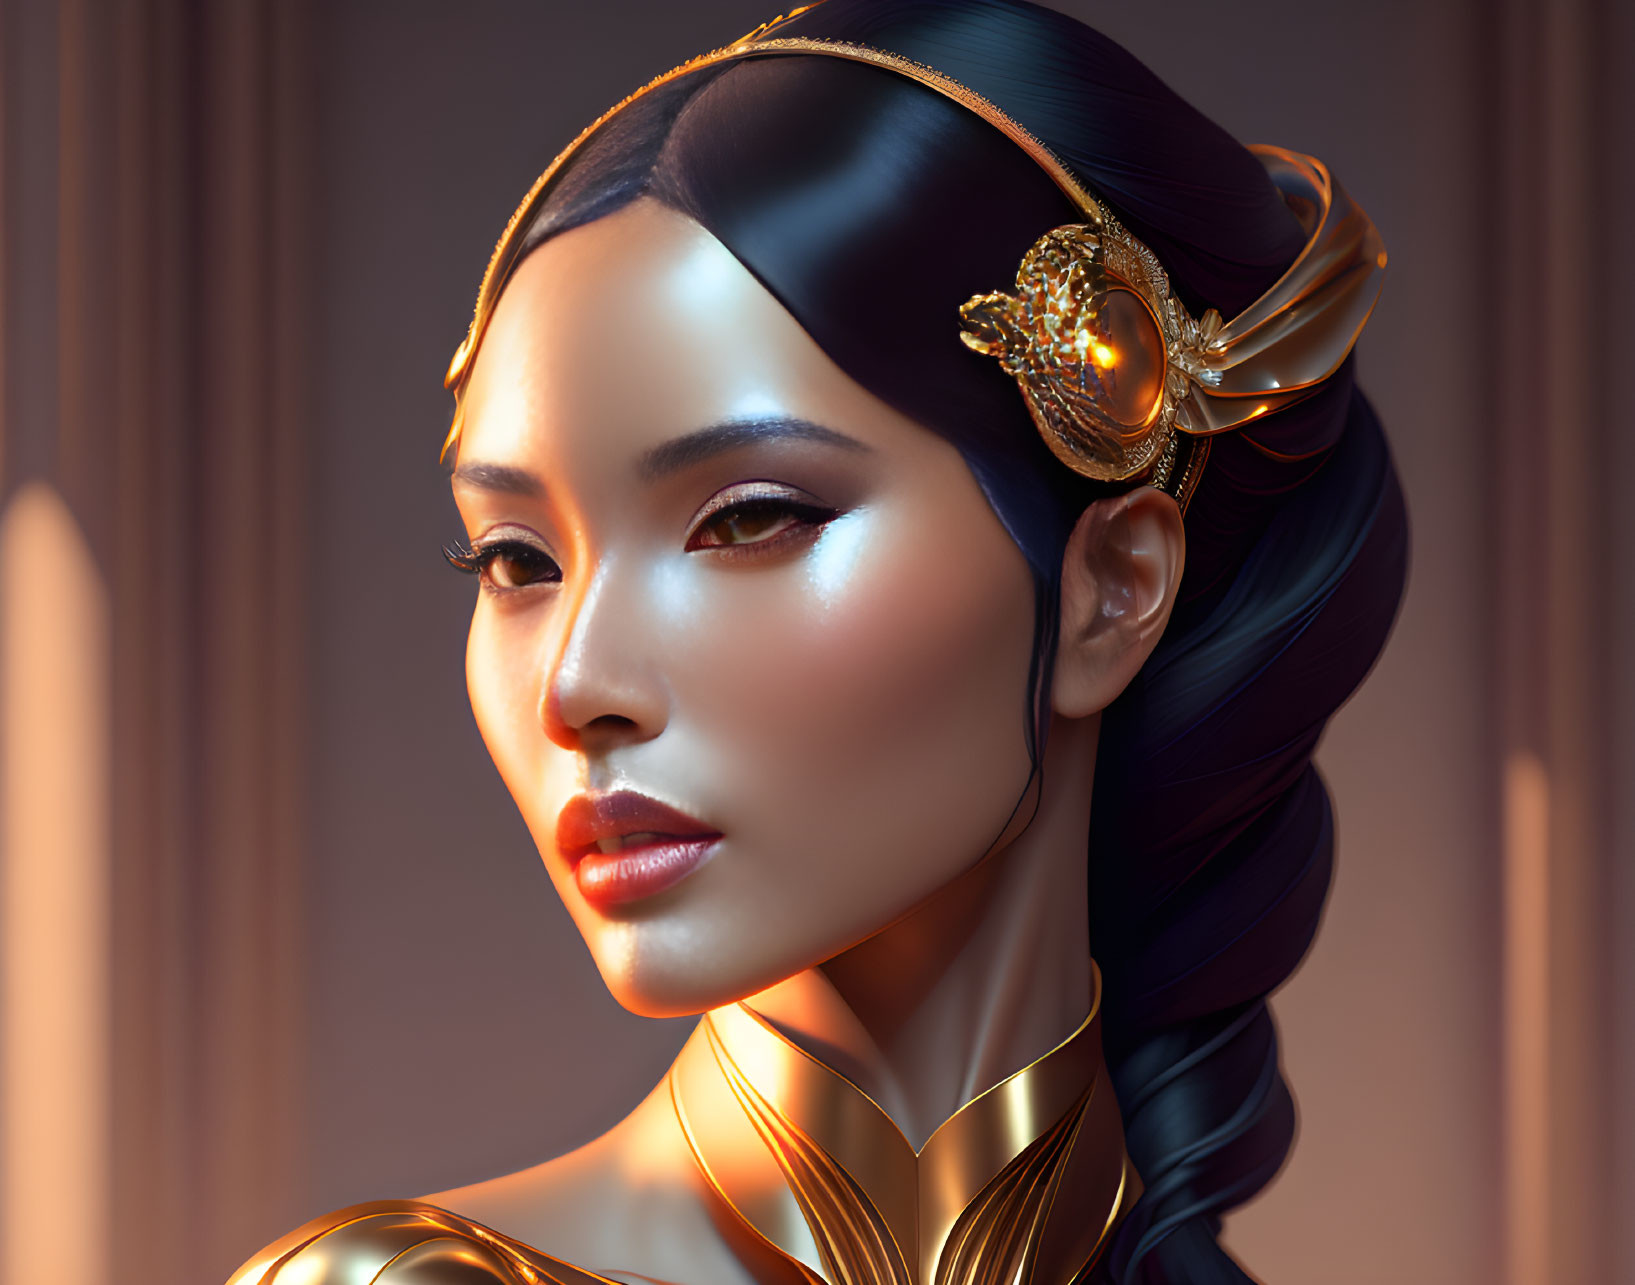 Digital portrait of woman with gold headpiece, black hair, intense gaze, flawless skin on warm backdrop